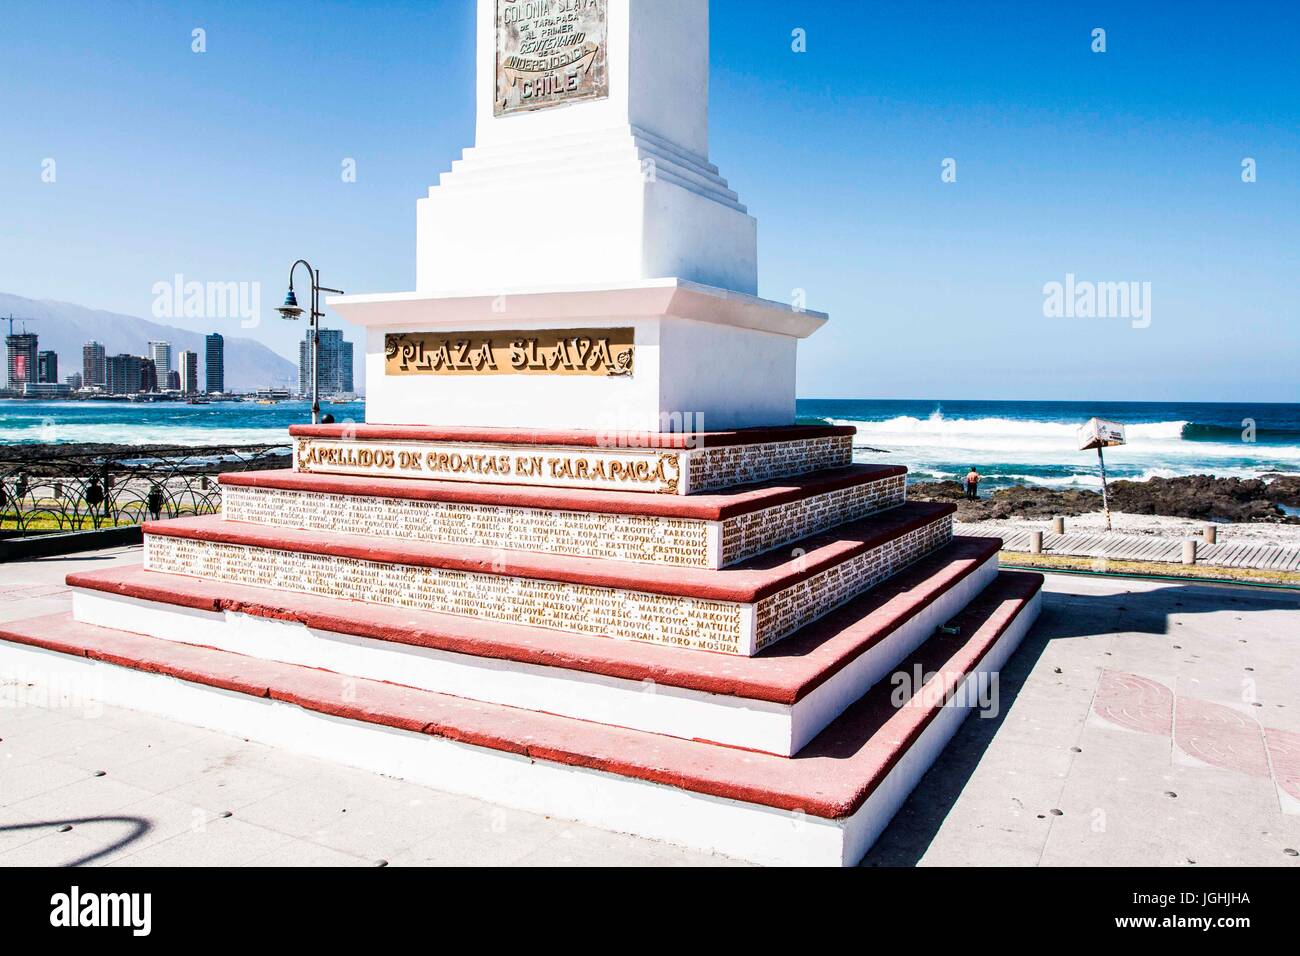 Plaza Slava, at Cavancha Beach. Iquique, Tarapaca Region, Chile. 17.11.15 Stock Photo